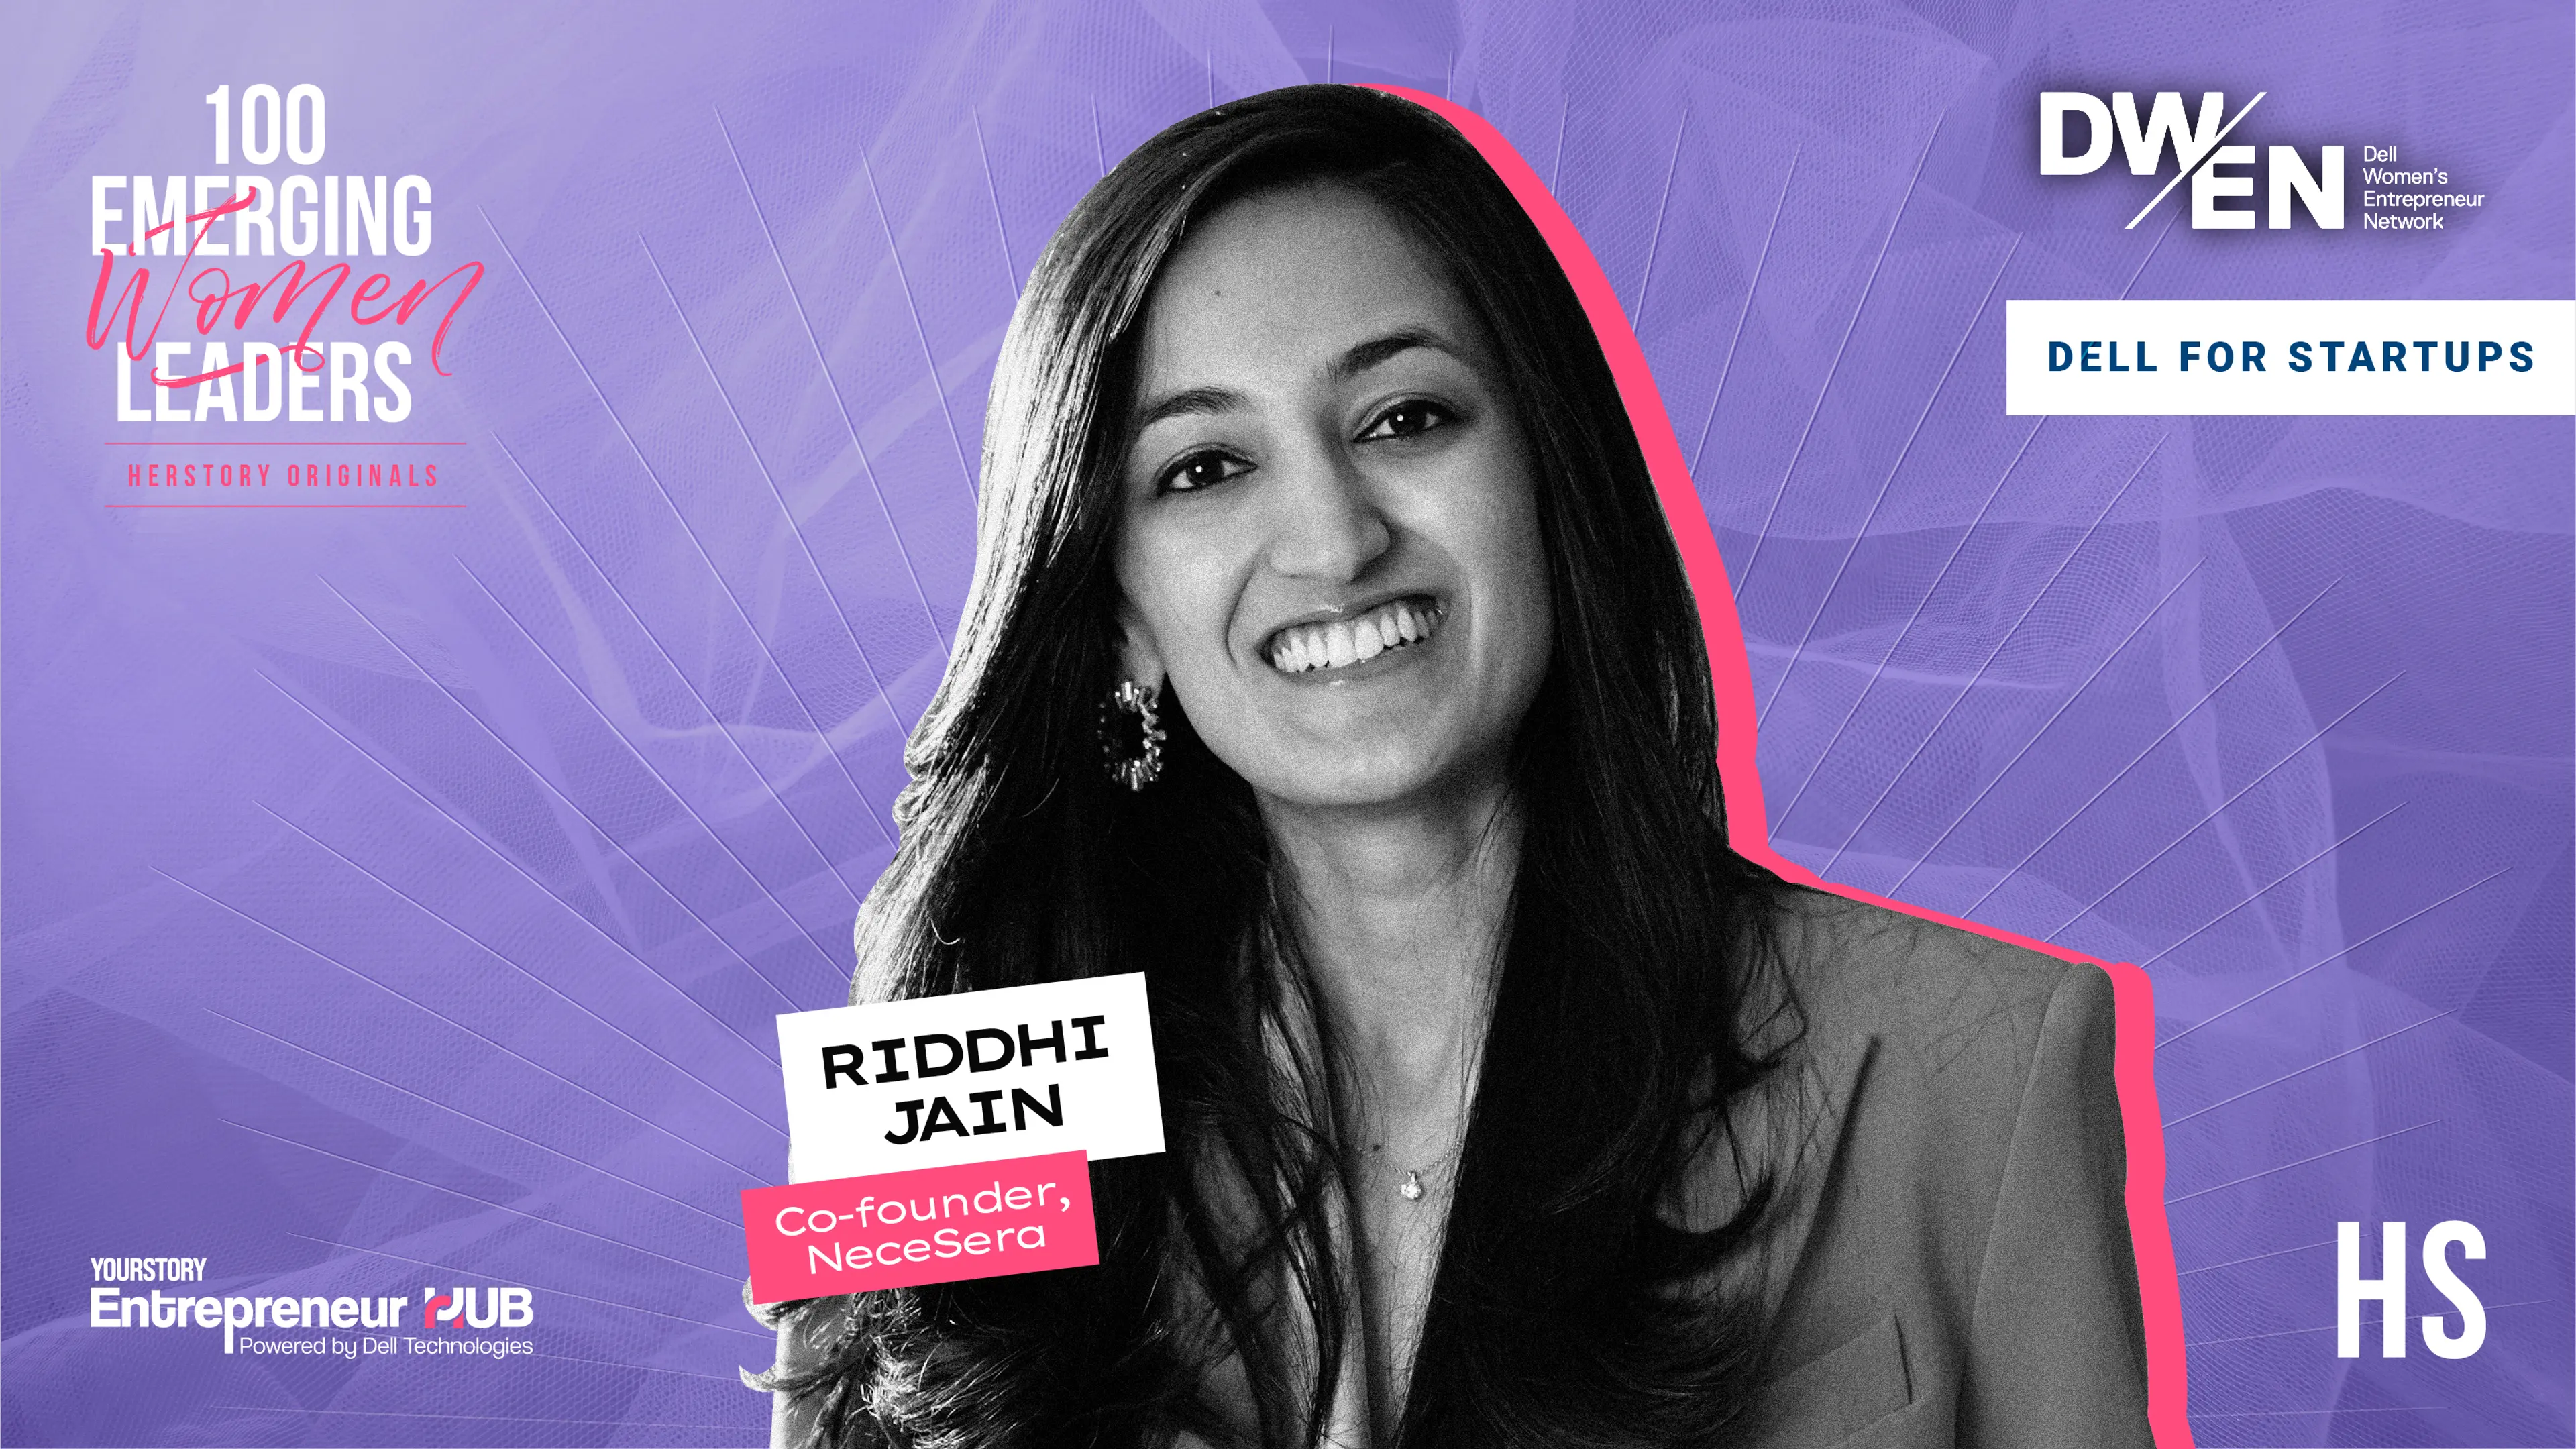 [100 Emerging Women Leaders] How Riddhi Jain is redefining comfort in loungewear fashion
